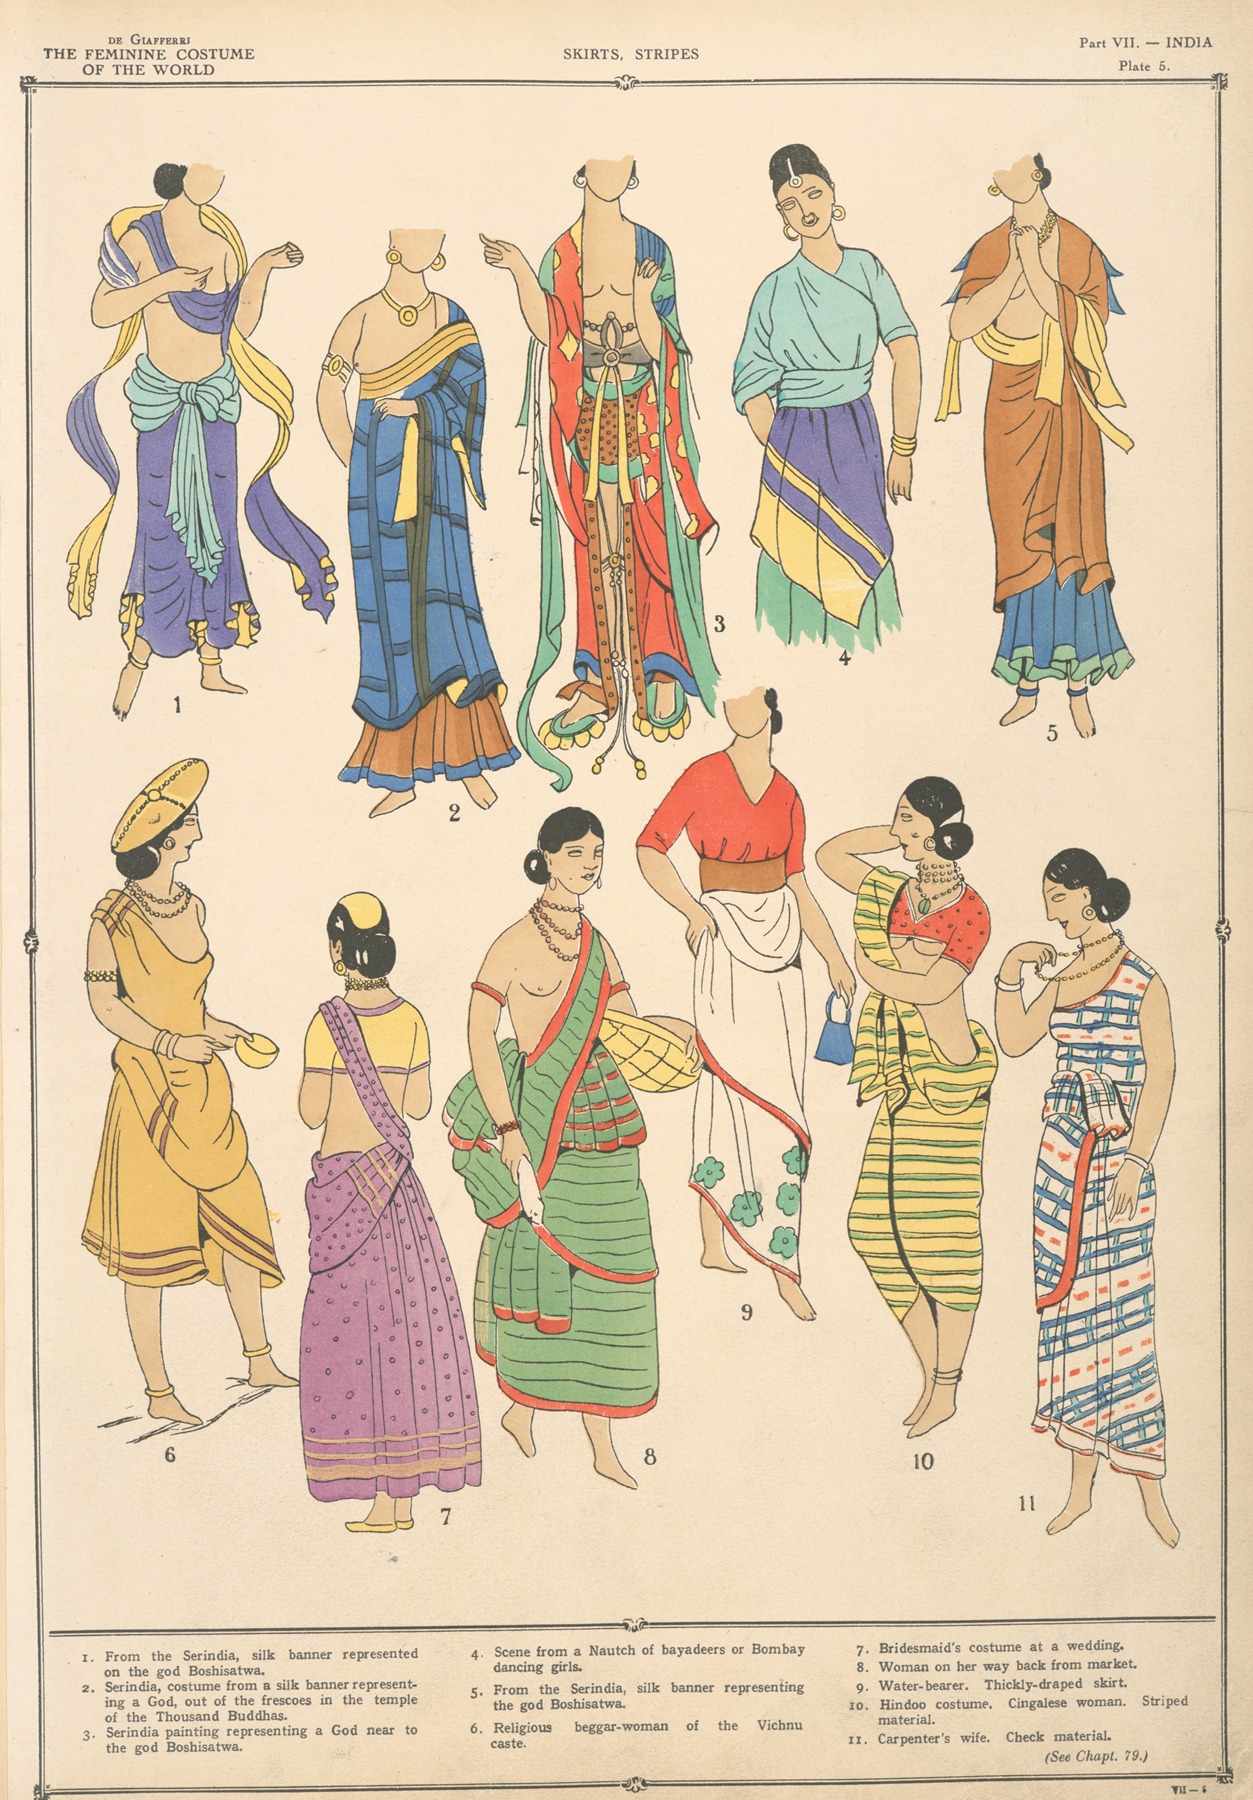 Paul Louis de Giafferri - India – Skirts, stripes